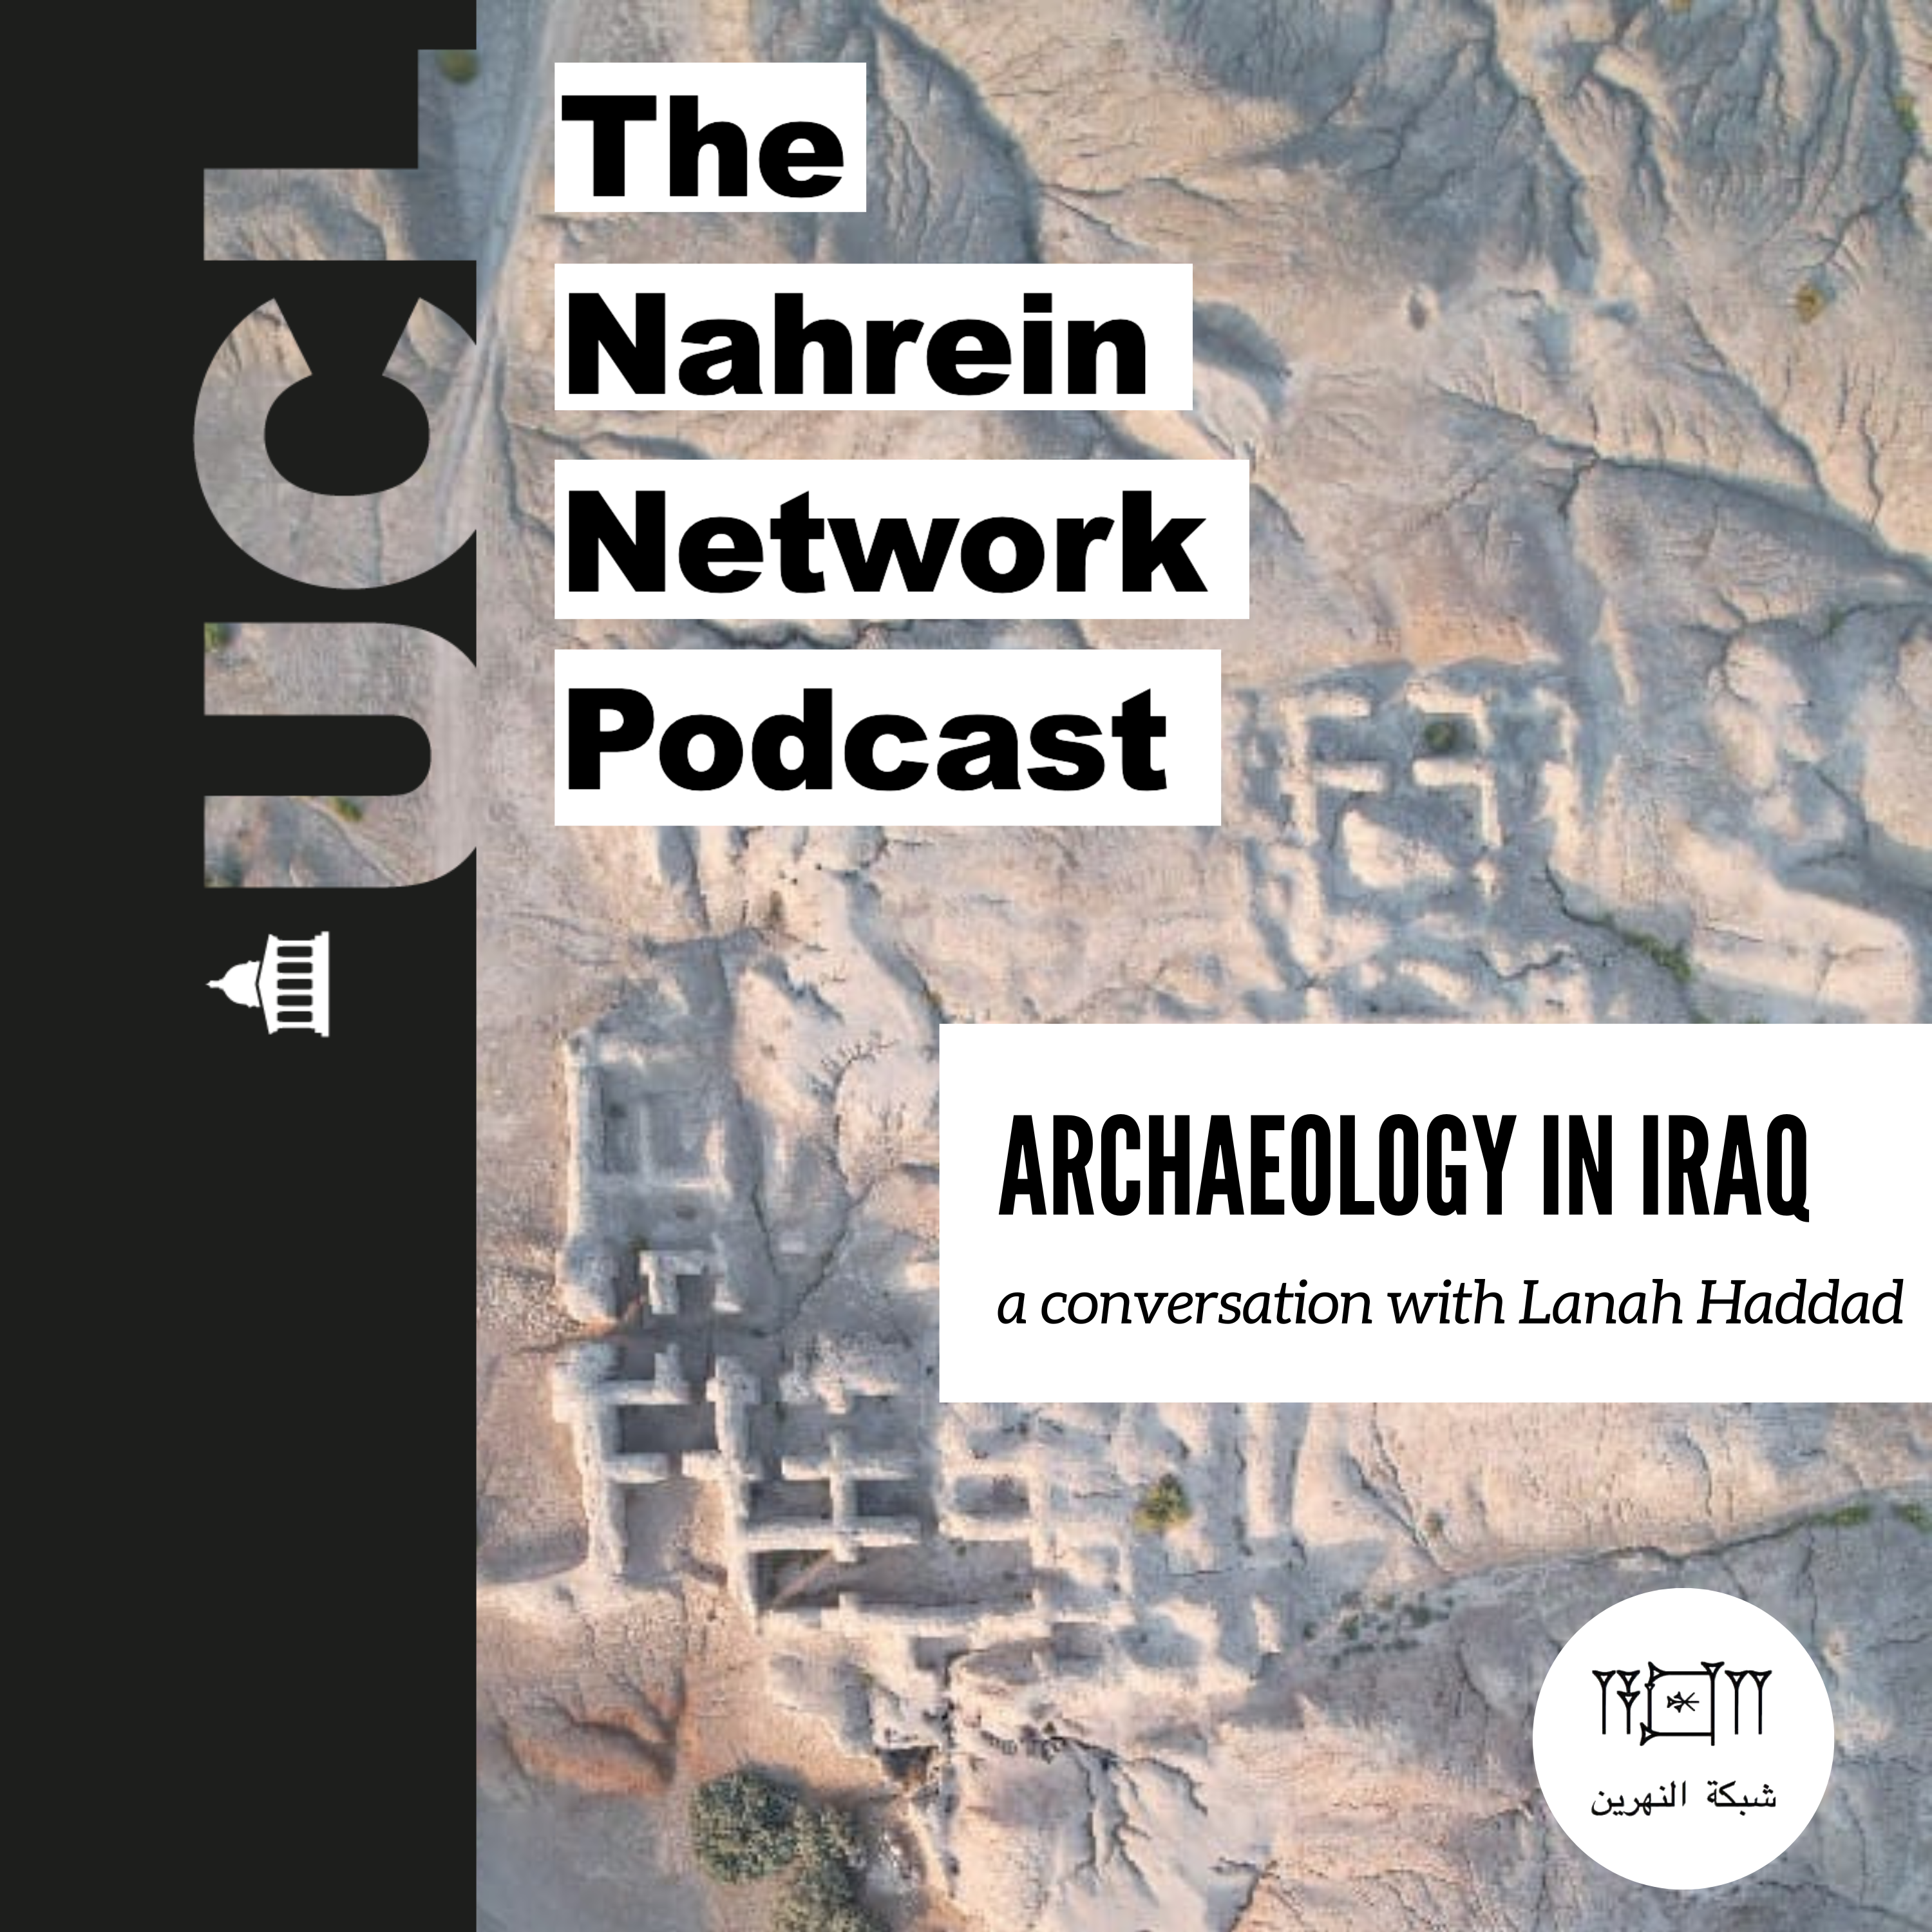 Lanah Haddad podcast